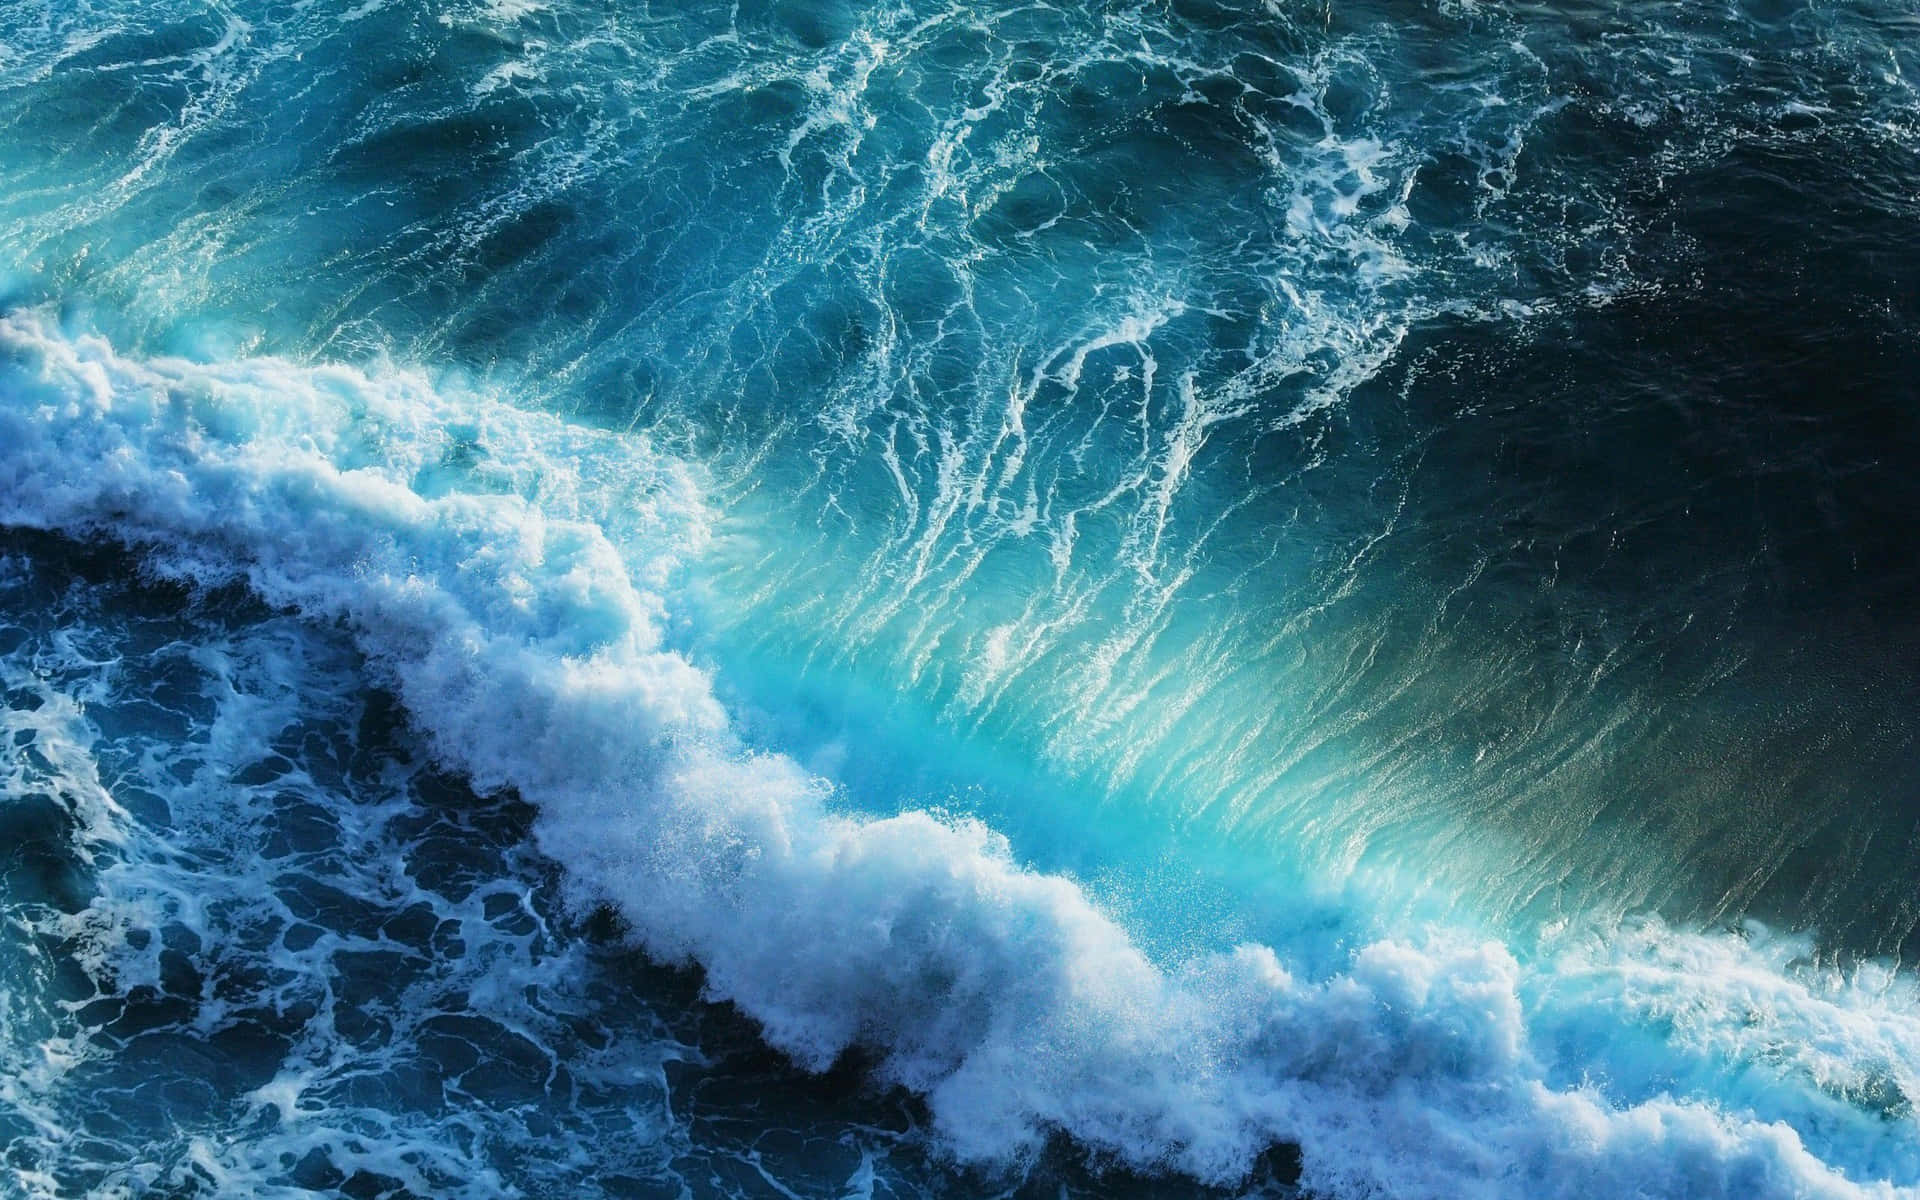 Olasvibrantes De Un Océano Azul Chocando En La Orilla